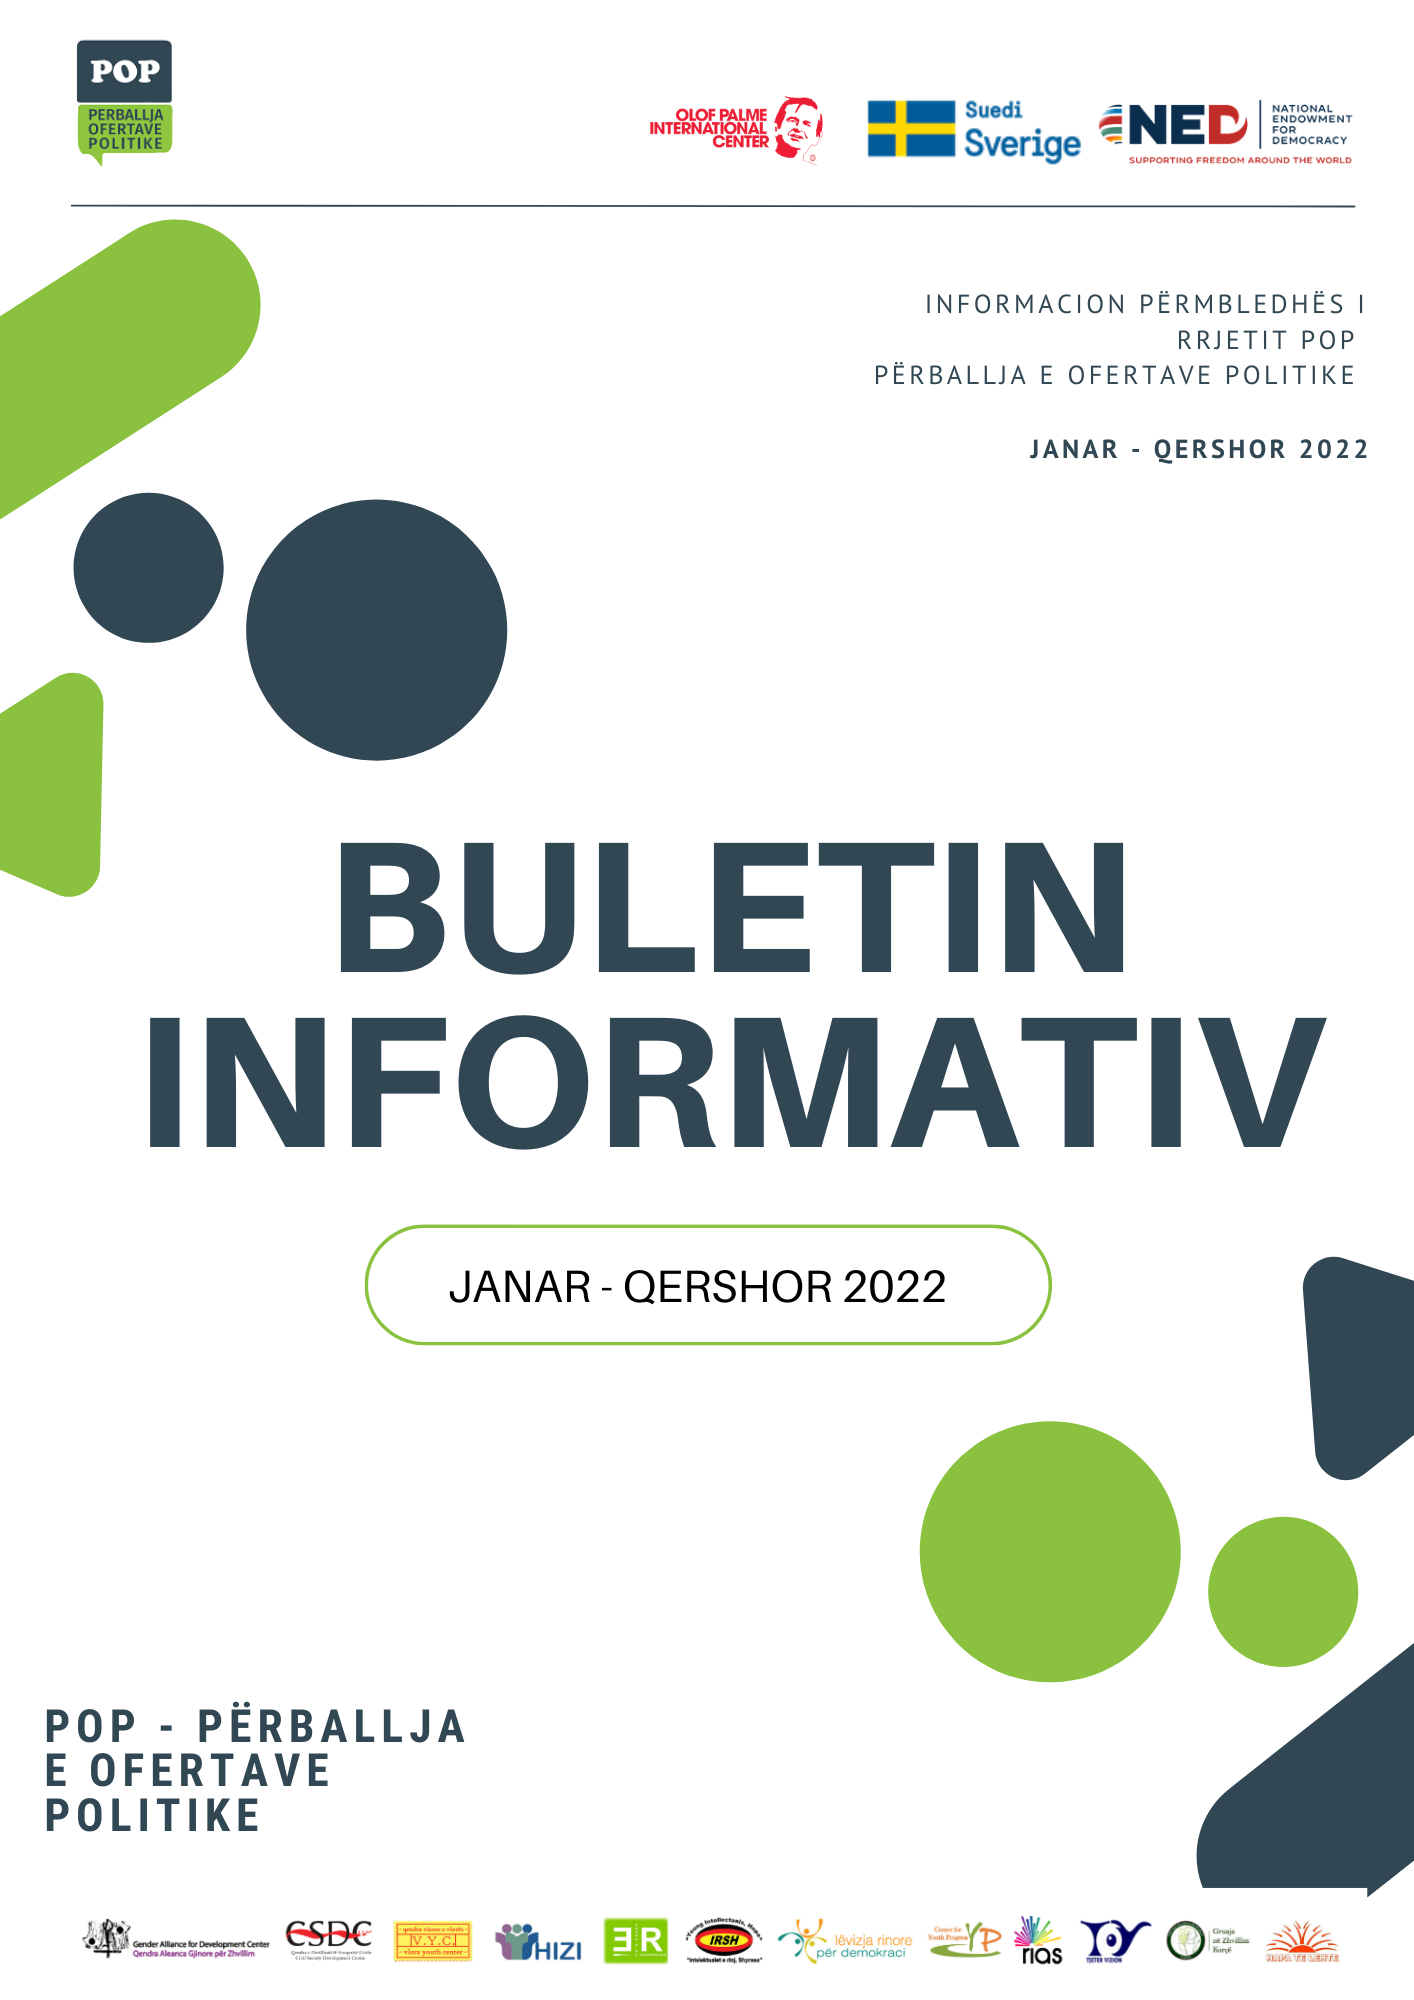 Buletini Informativ POP janar – qershor 2022